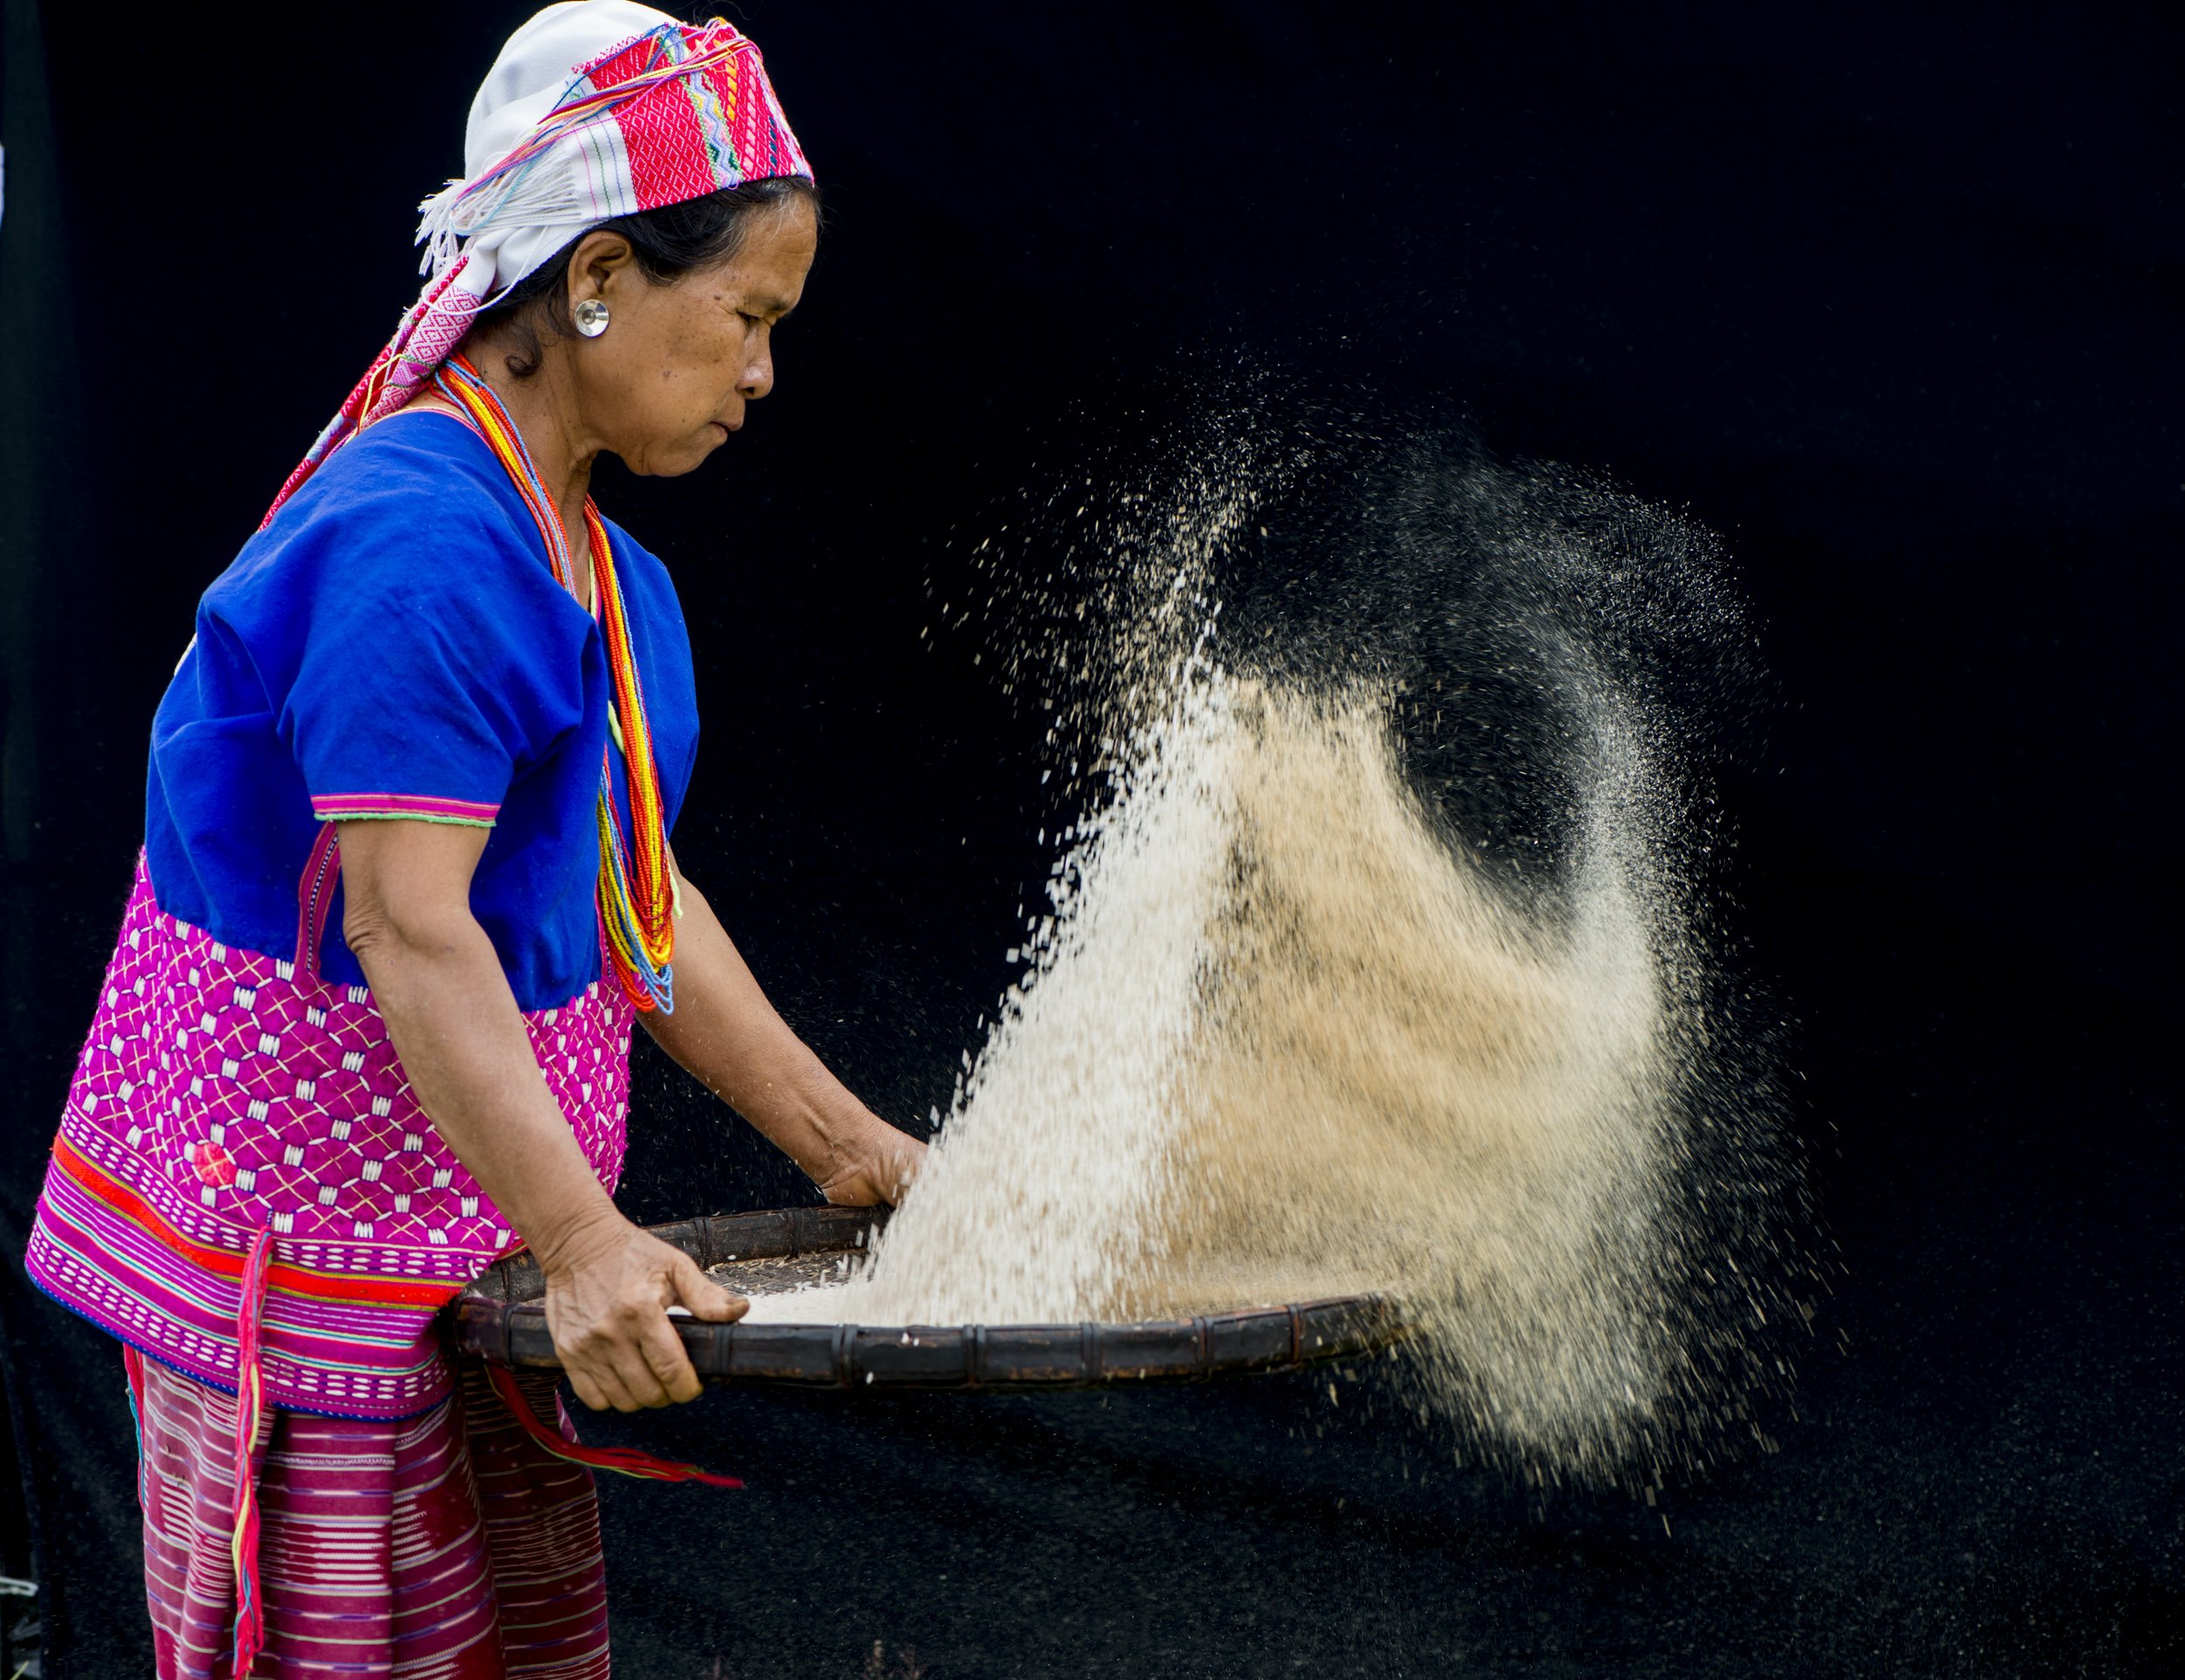 Karen woman processing rice for camera or phone article